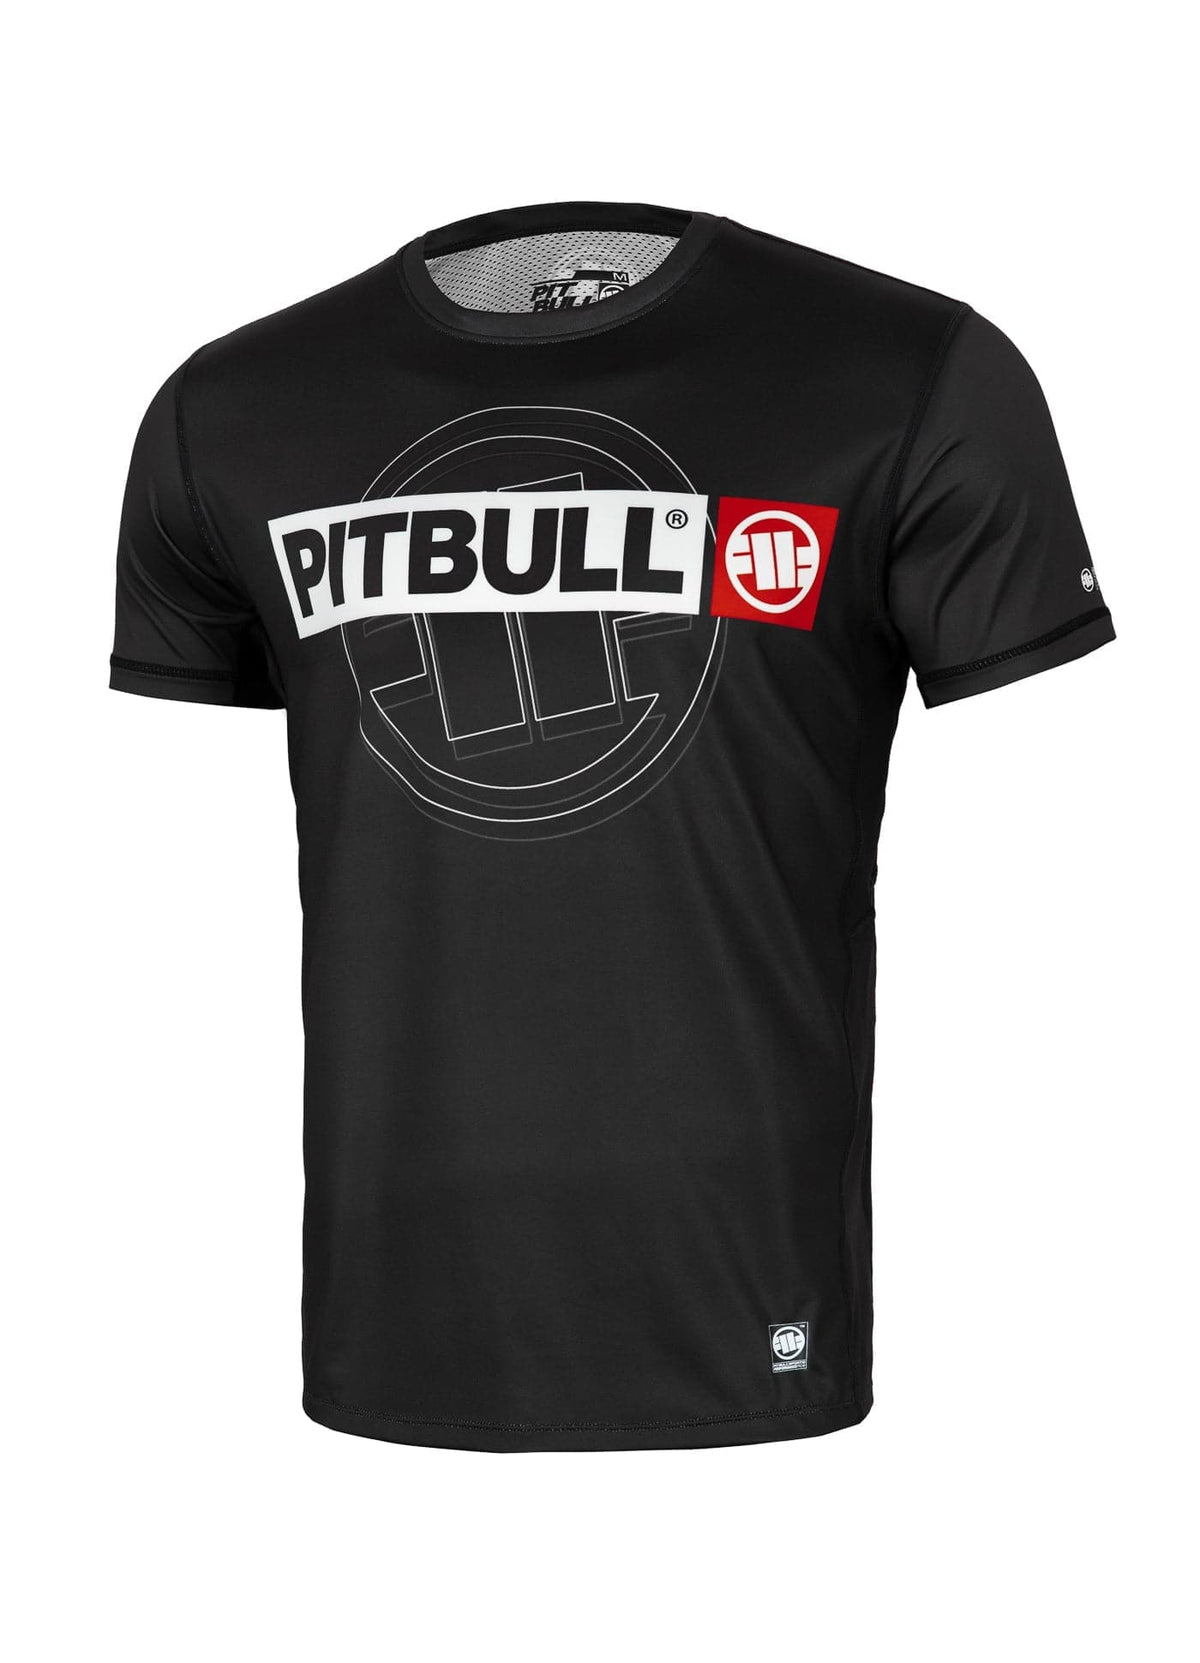 HILLTOP SPORTS Black Mesh T-shirt - Pitbull West Coast International Store 